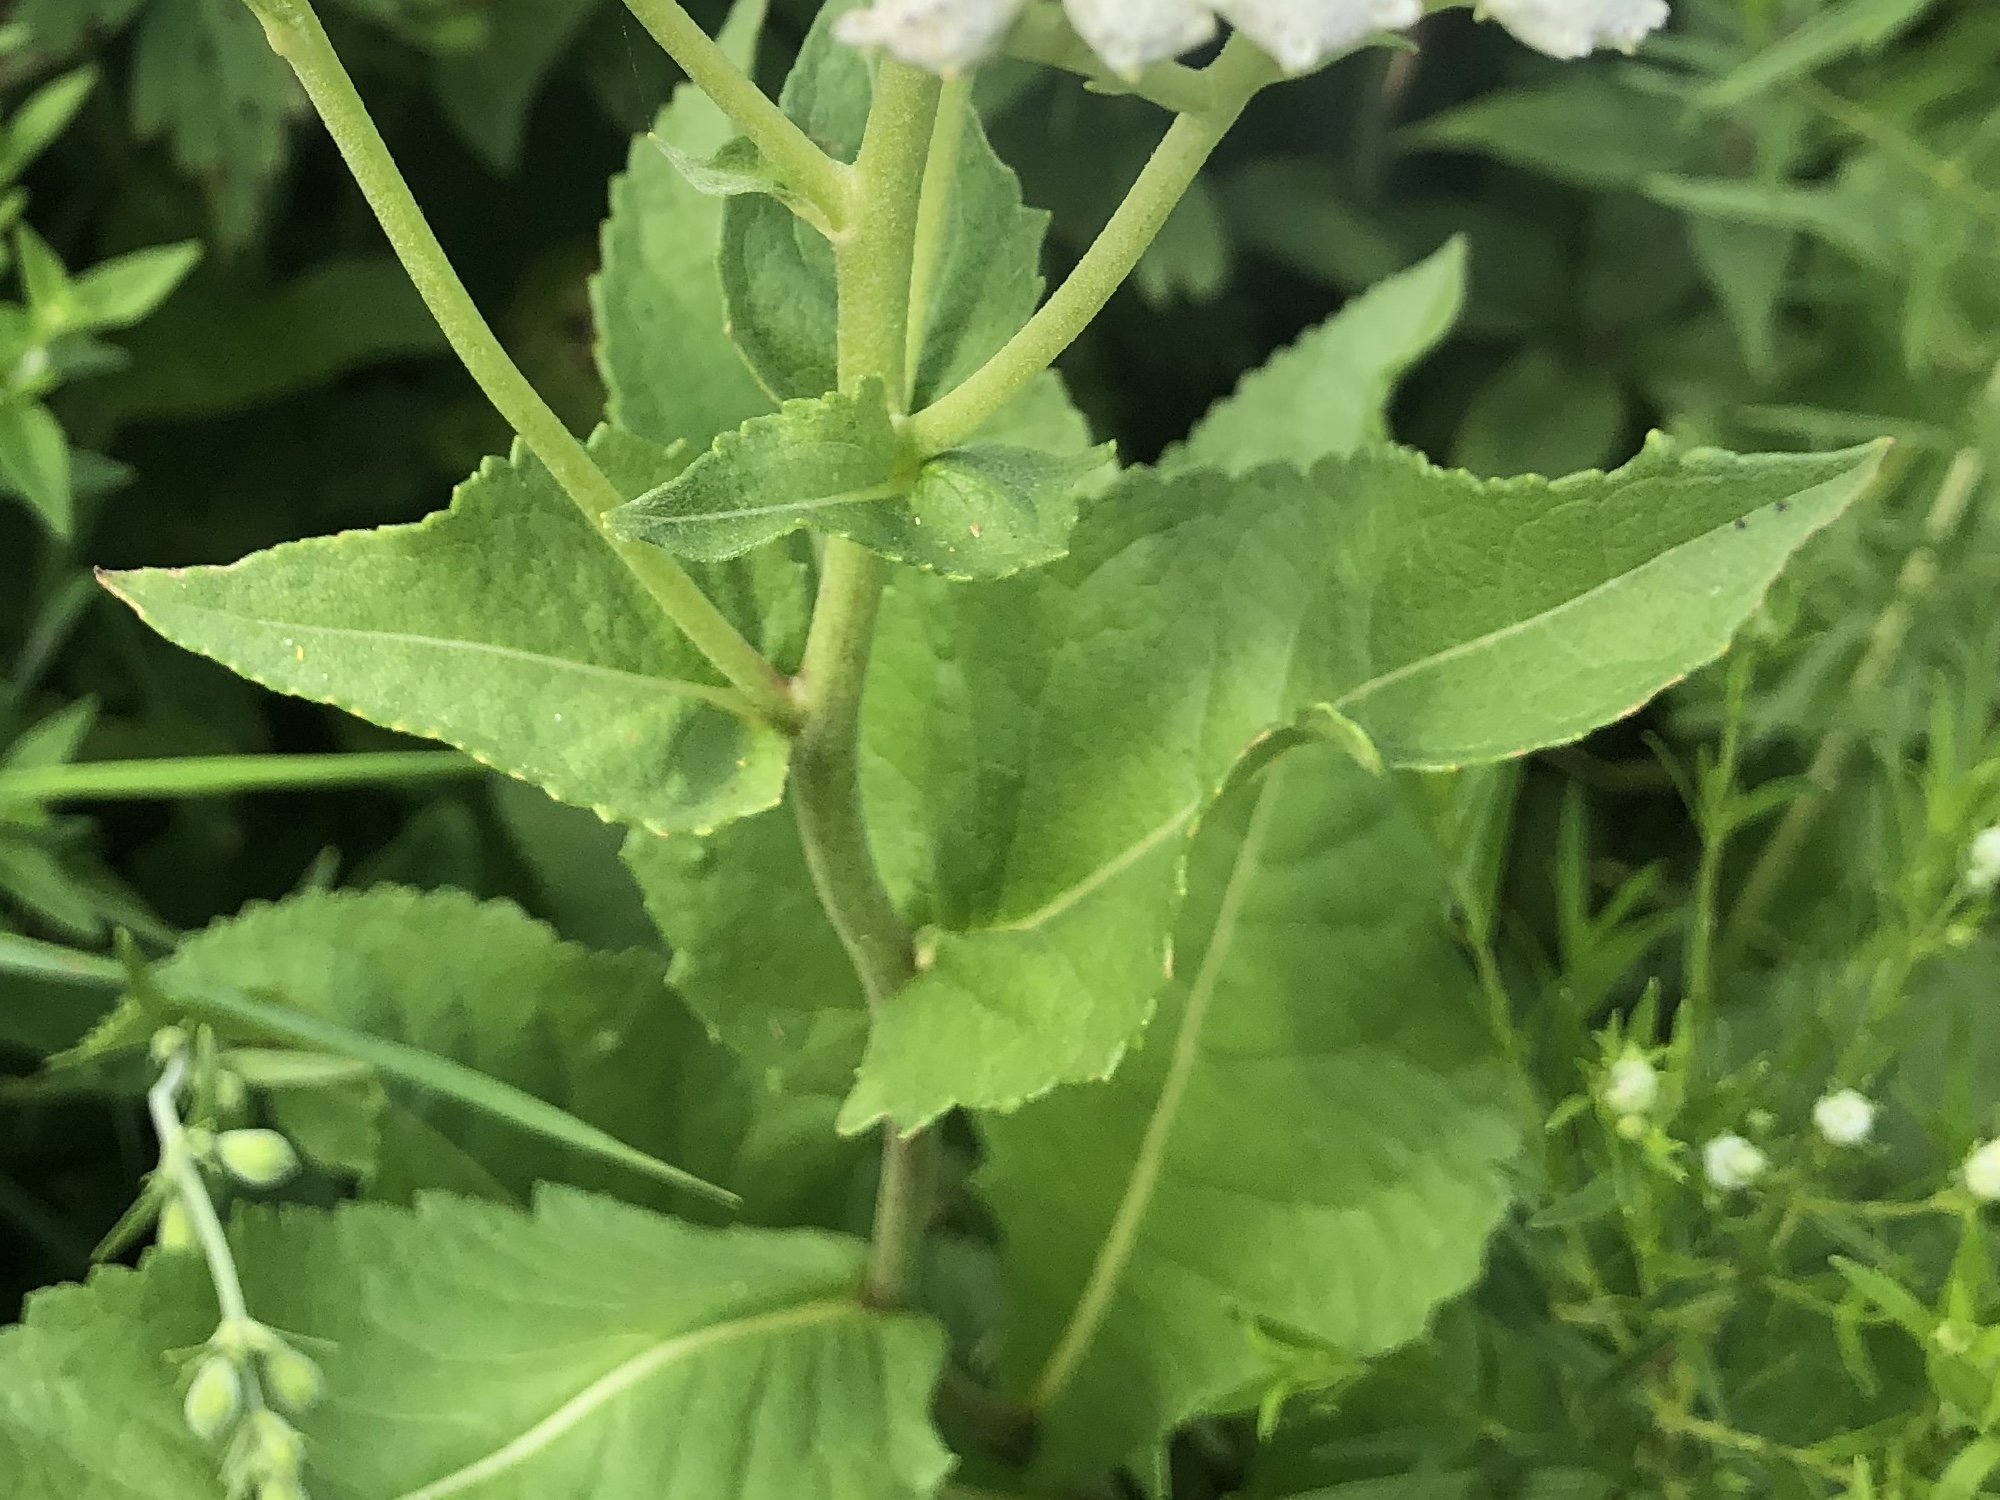 Wild Quinine leaves on July 5, 2021.